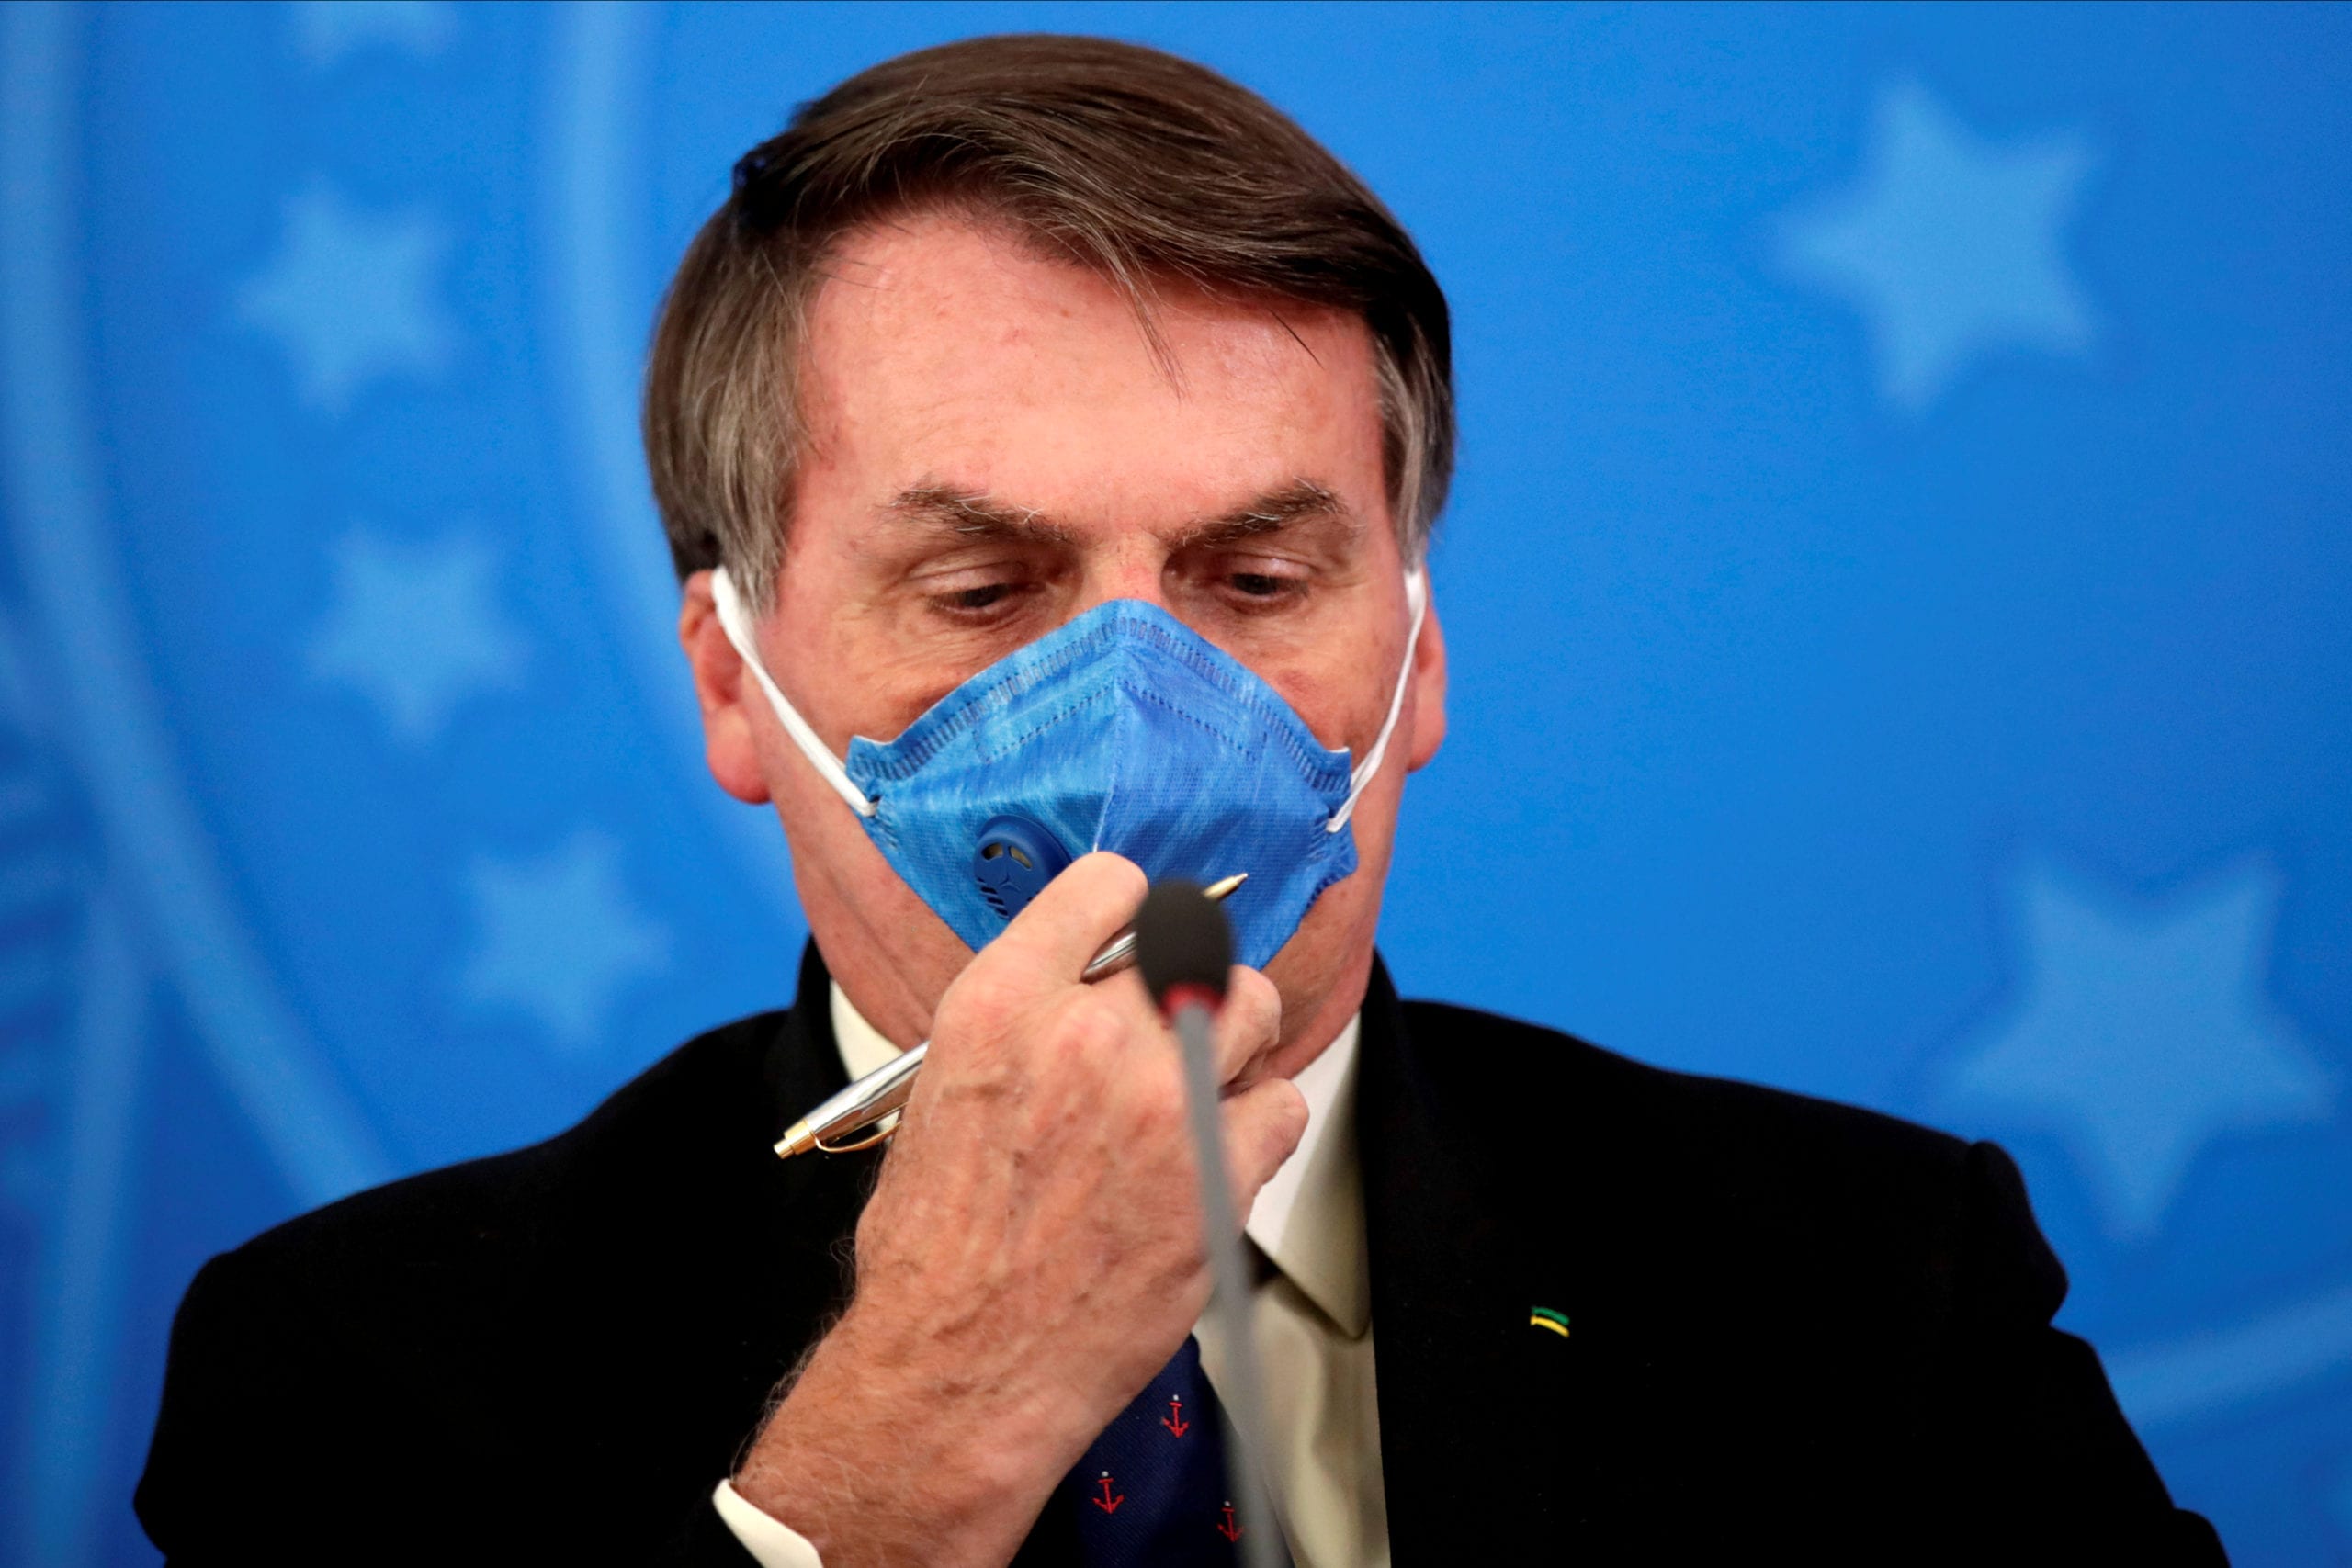 FILE PHOTO: Brazil's President Jair Bolsonaro adjusts his protective face mask at a press statement. REUTERS/Ueslei Marcelino/File Photo